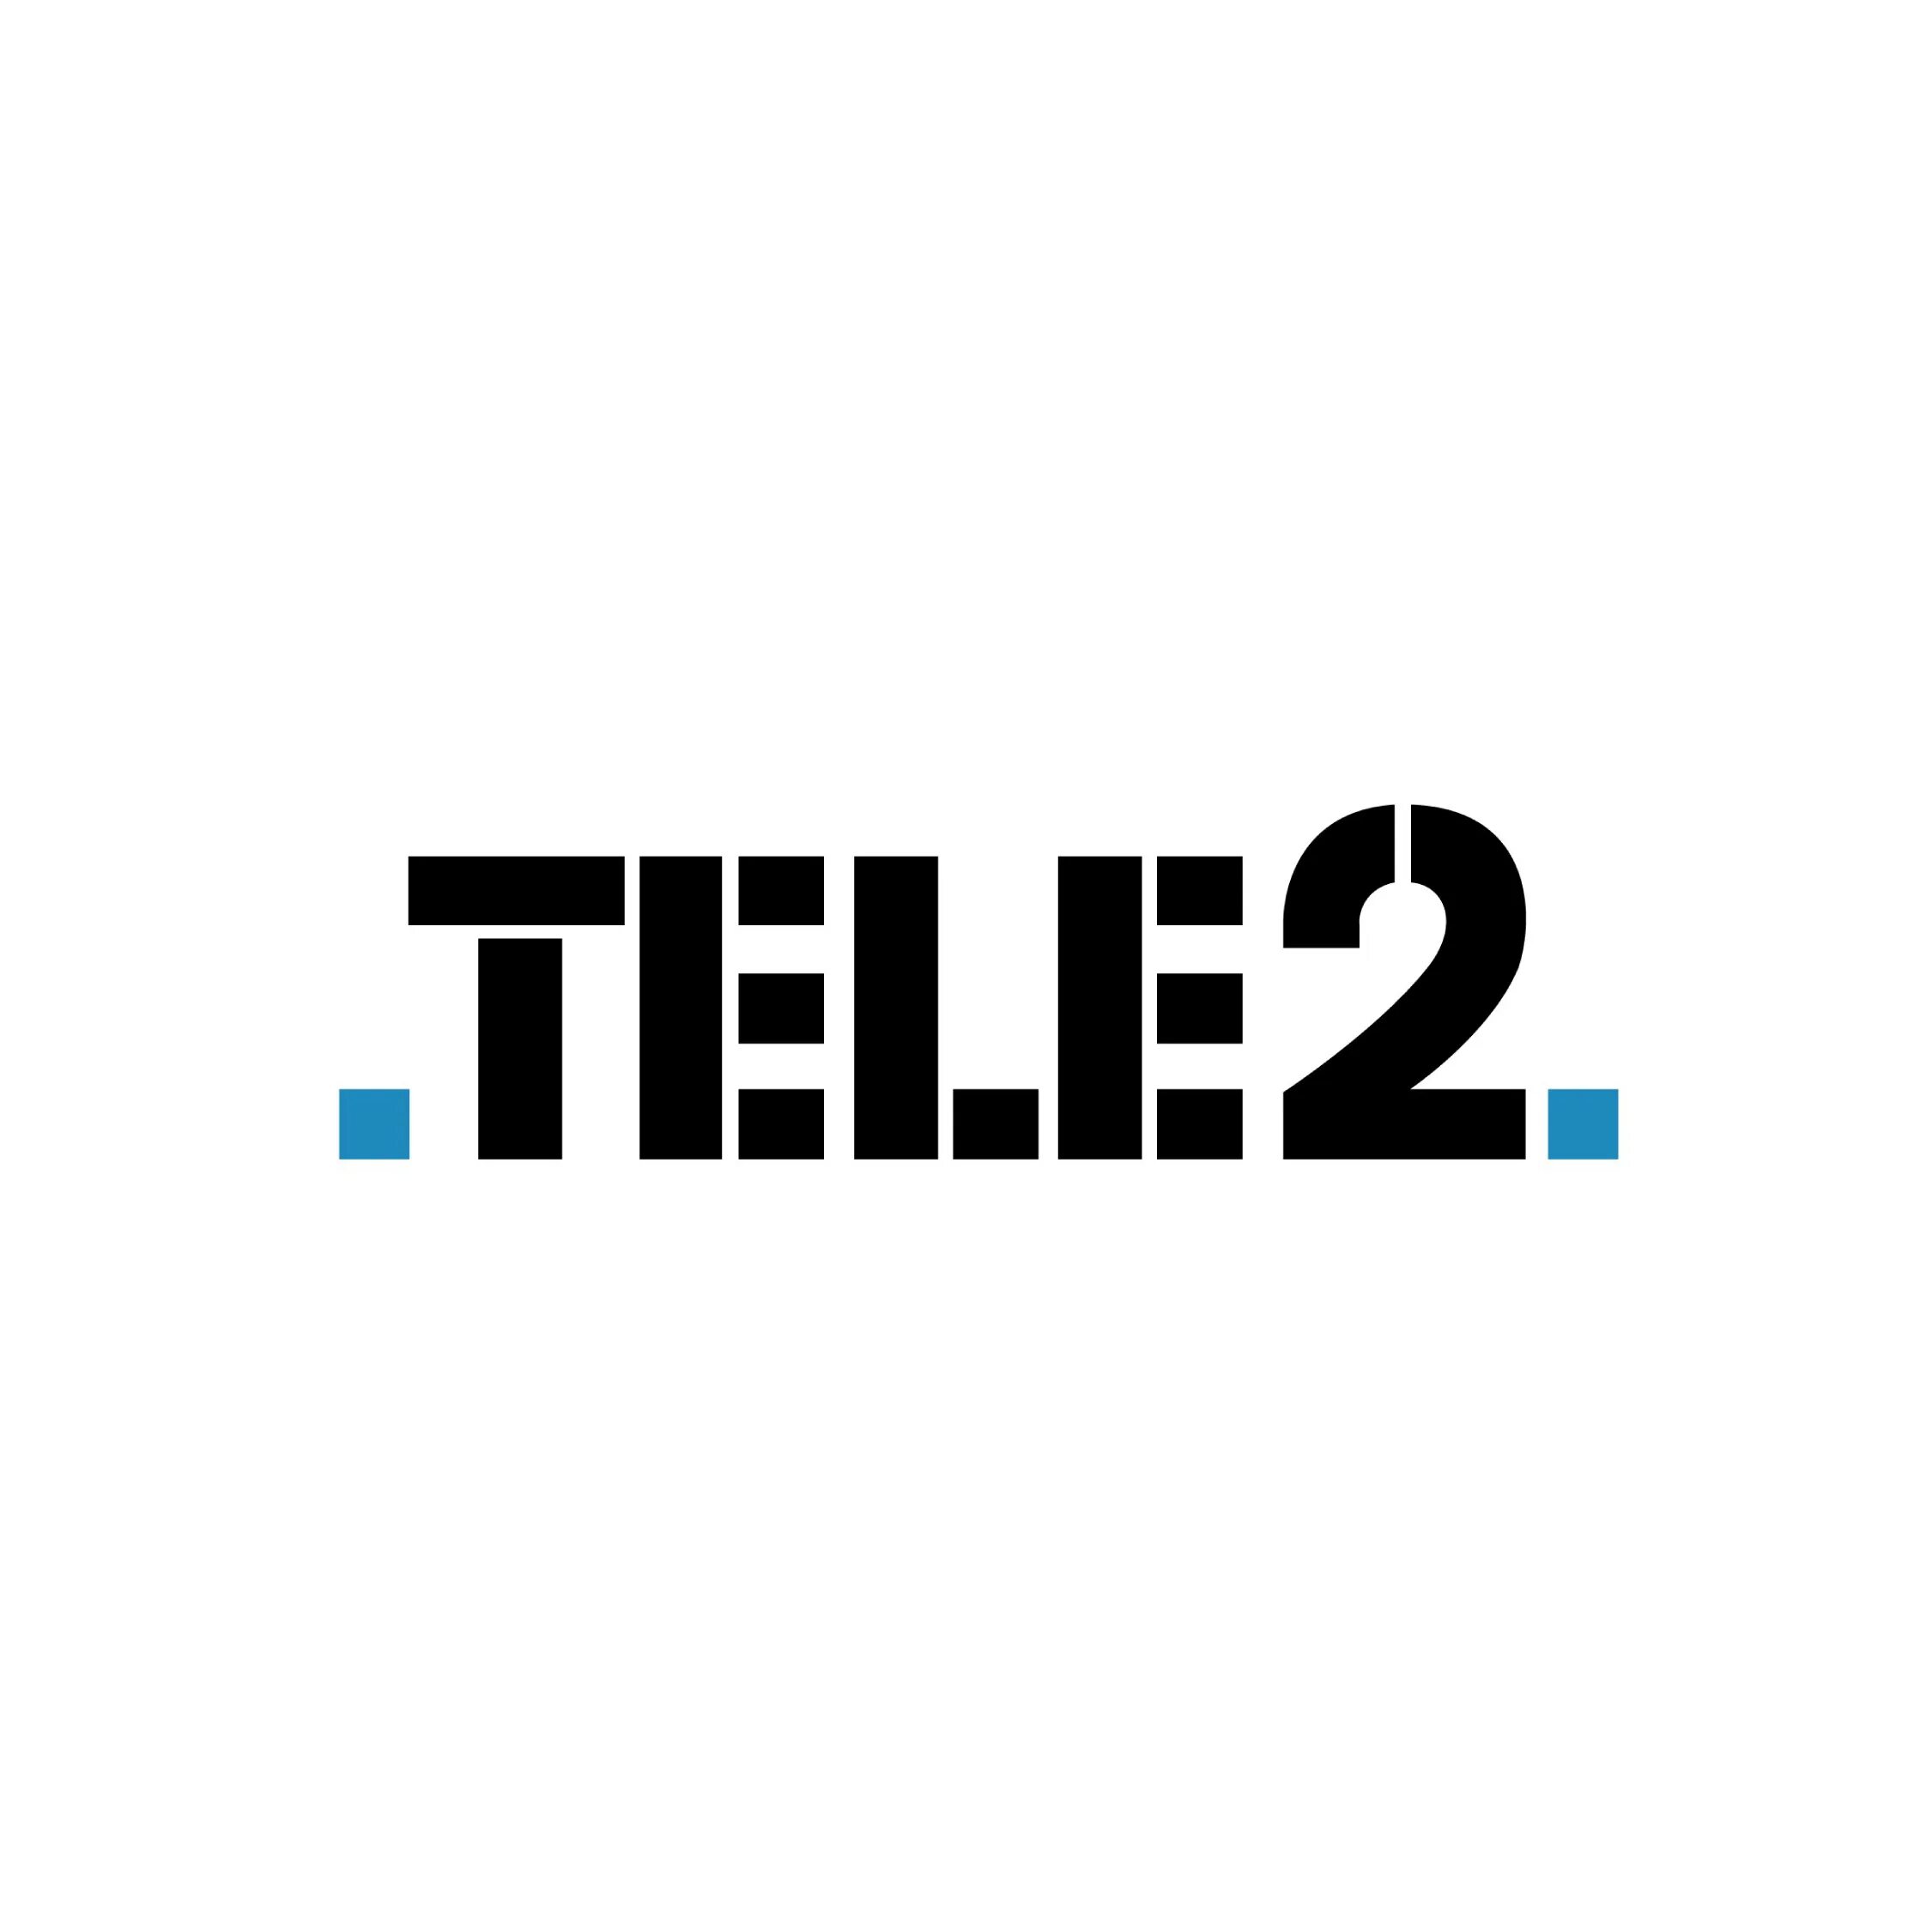 Фирменный знак теле2. Теле2 логотип 2022. Первый логотип теле2. Теле2 2003.